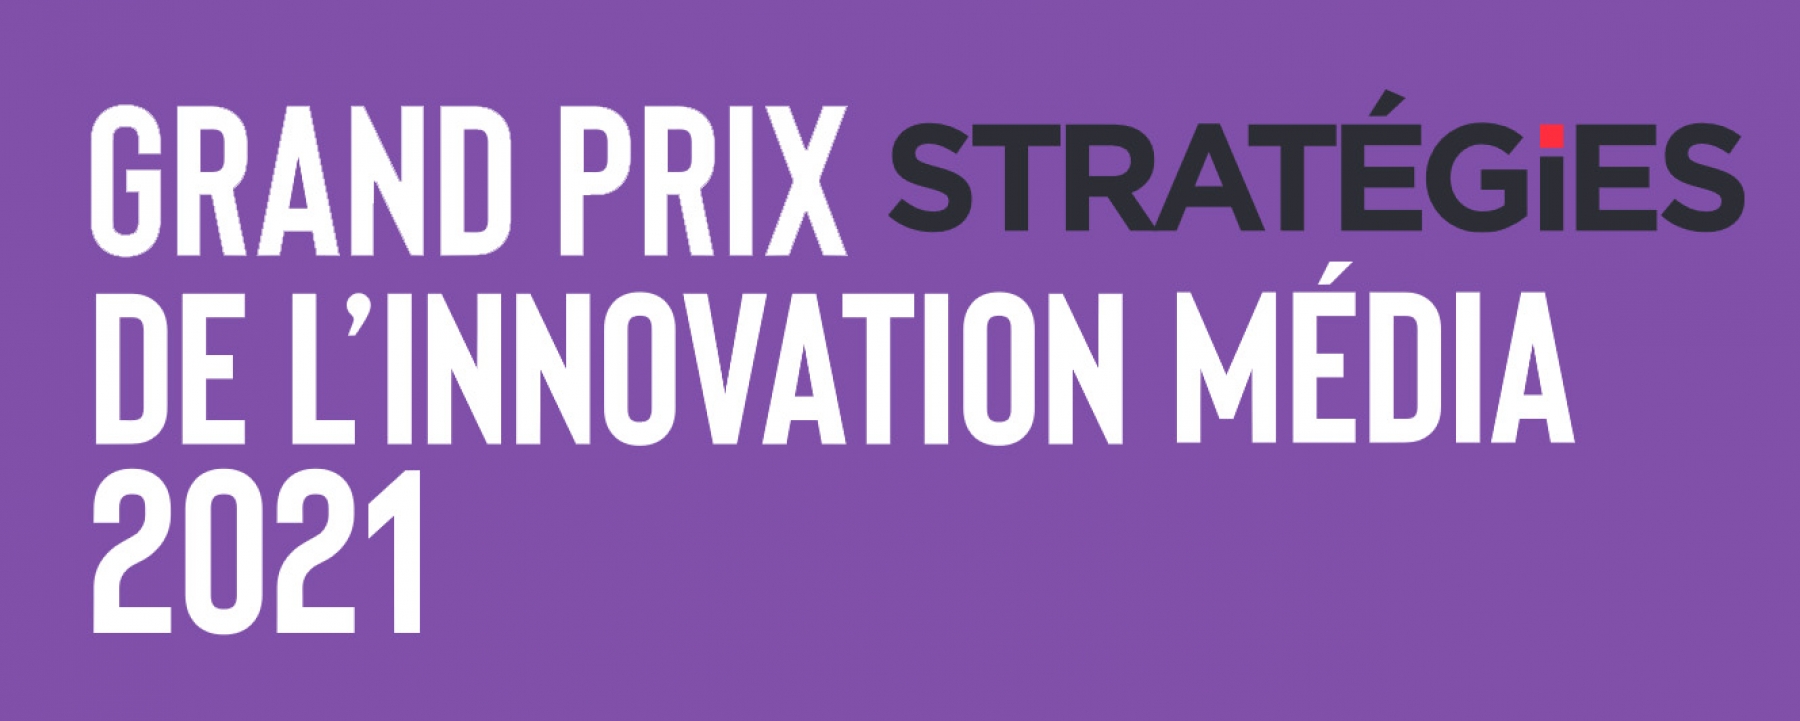 Grand Prix Stratégies de l’Innovation Média 2021, organisé par Stratégies le 19 mai 2021